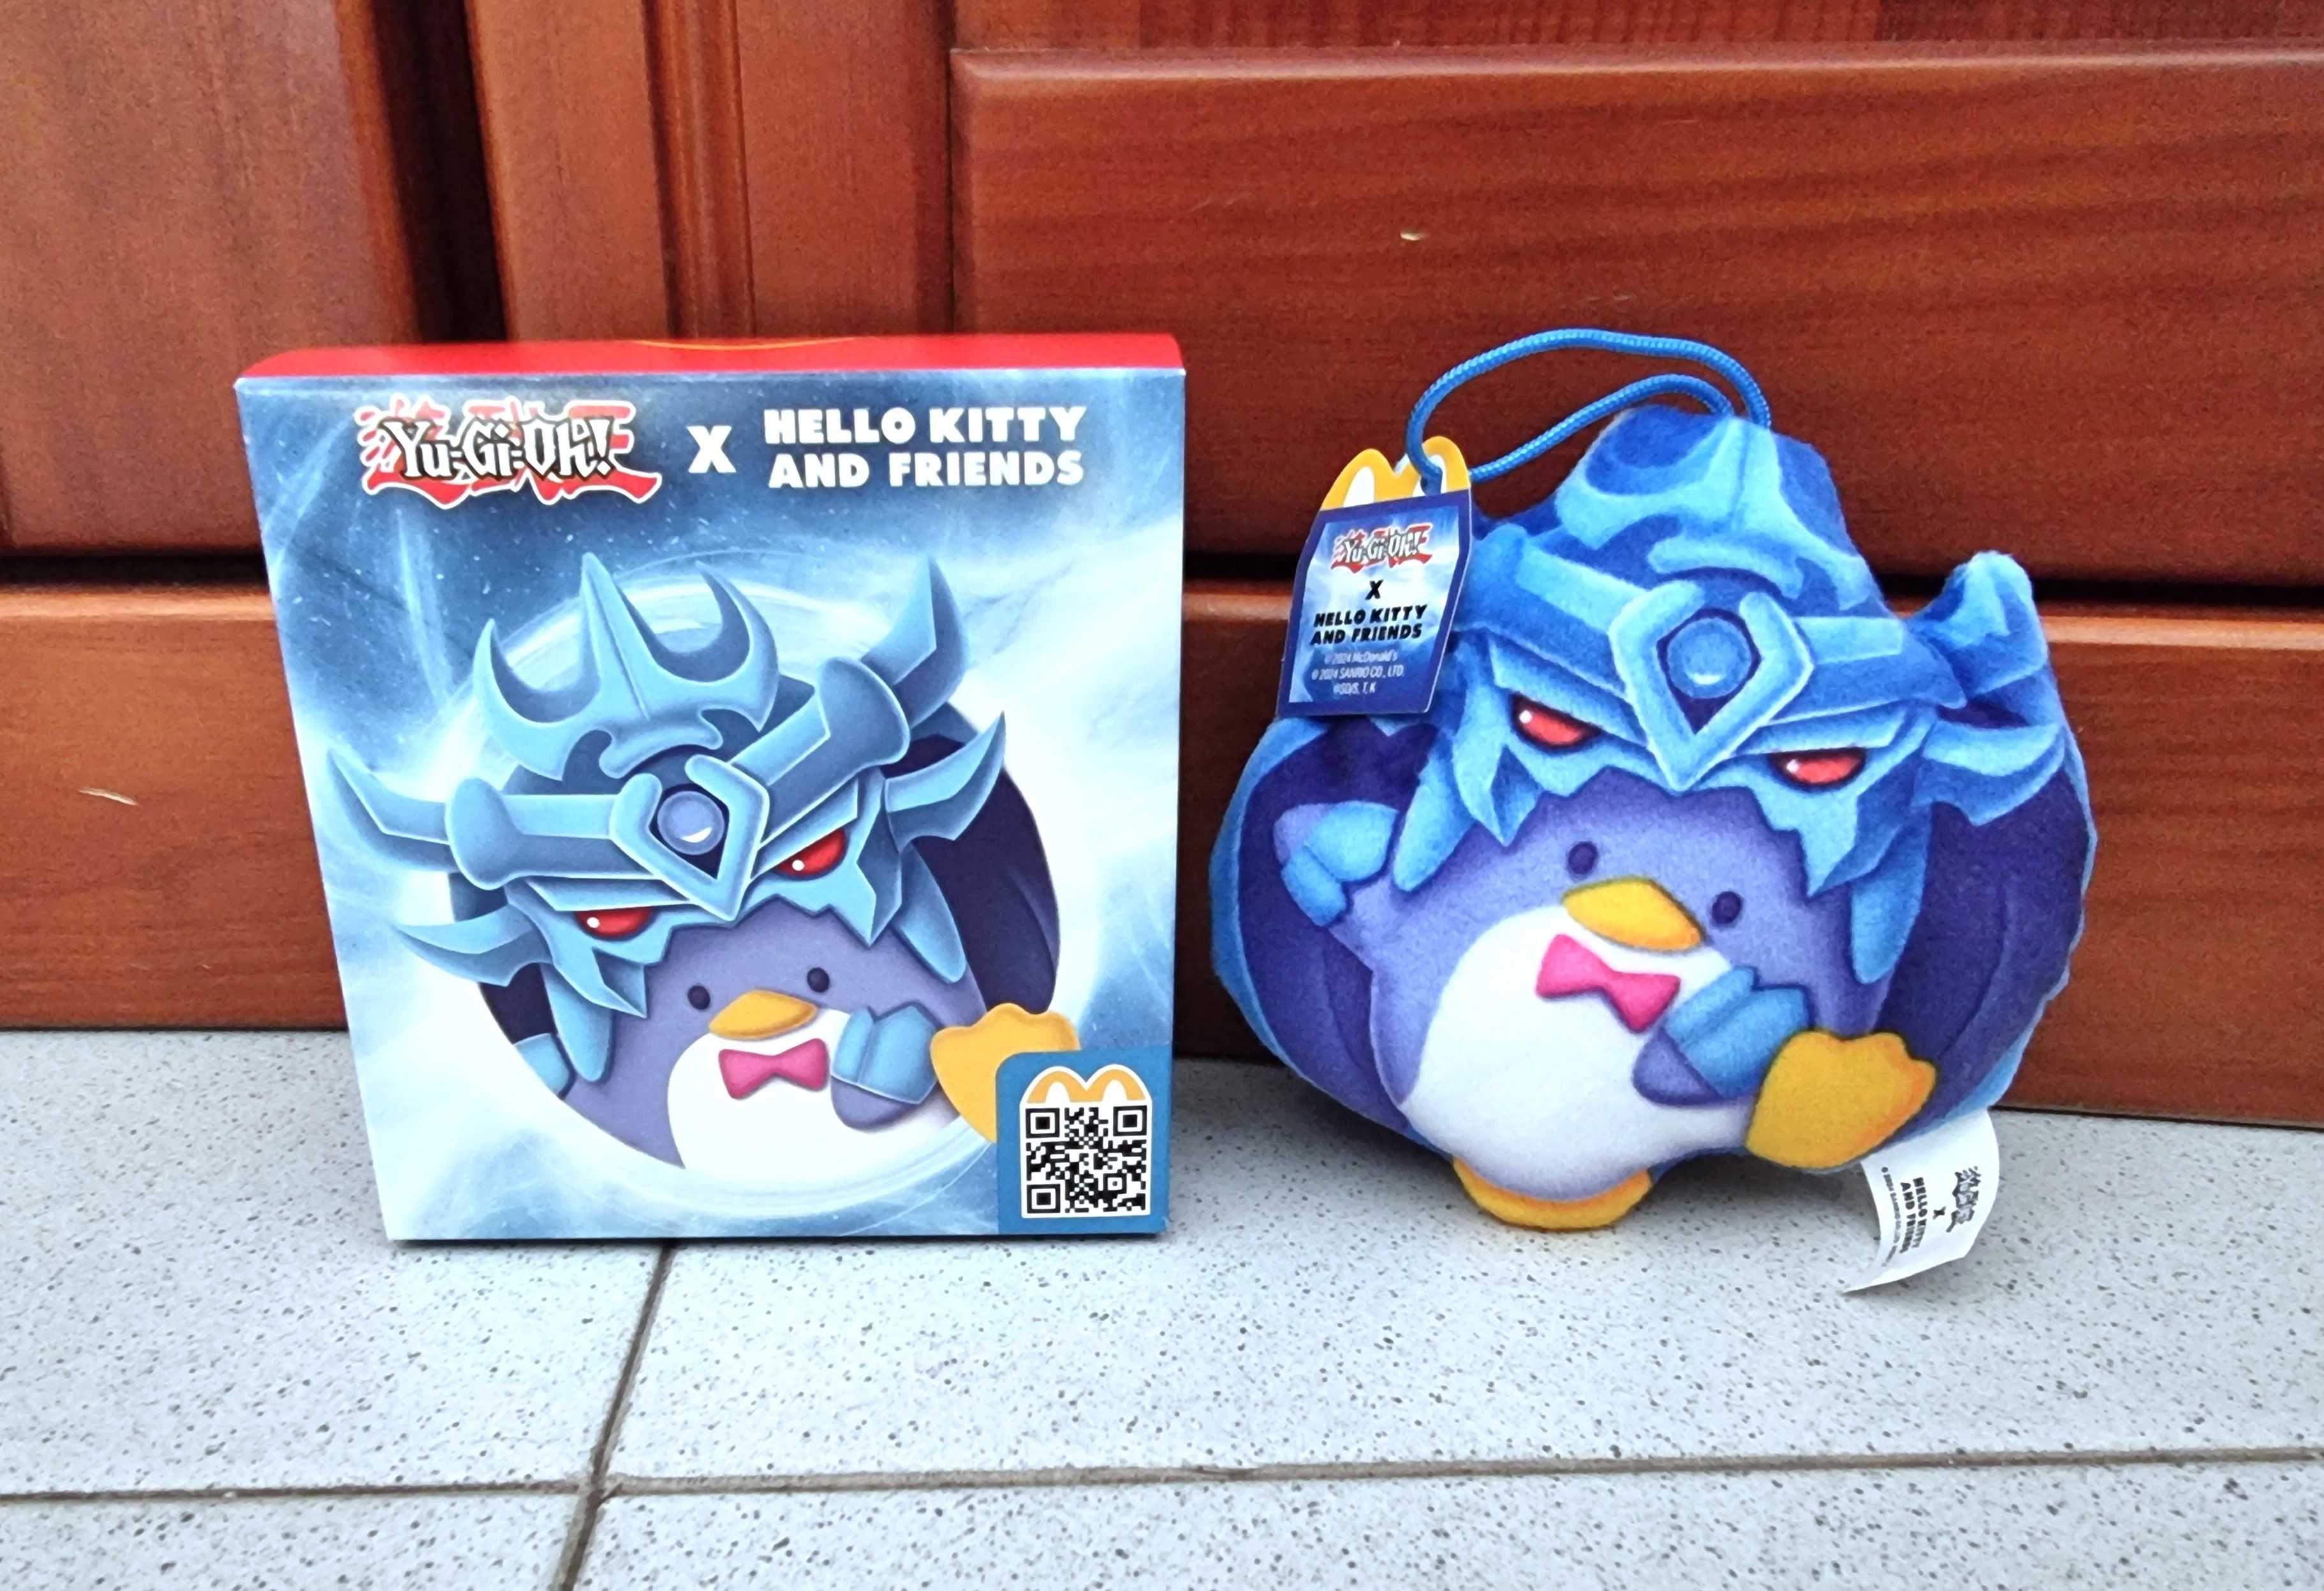 5 Brinquedos Yu-Gi-Oh! x Hello Kitty and Friends